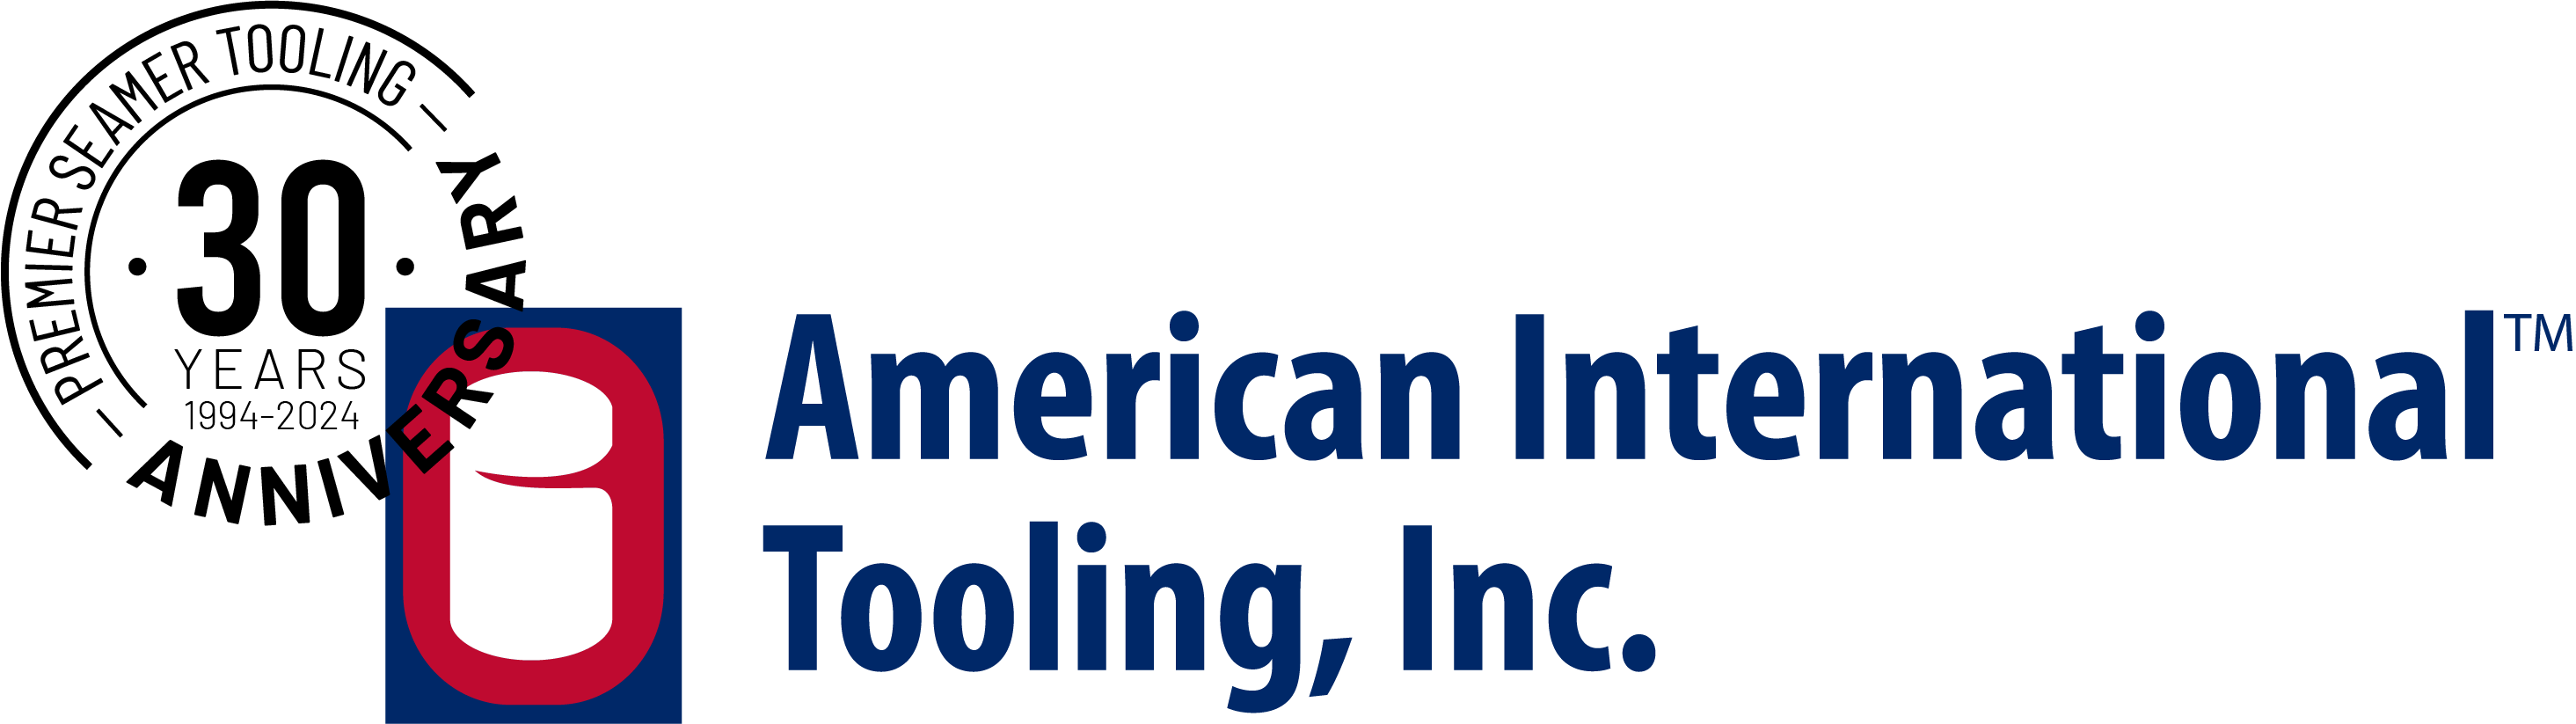 American International Tooling - Premier Seamer Tooling